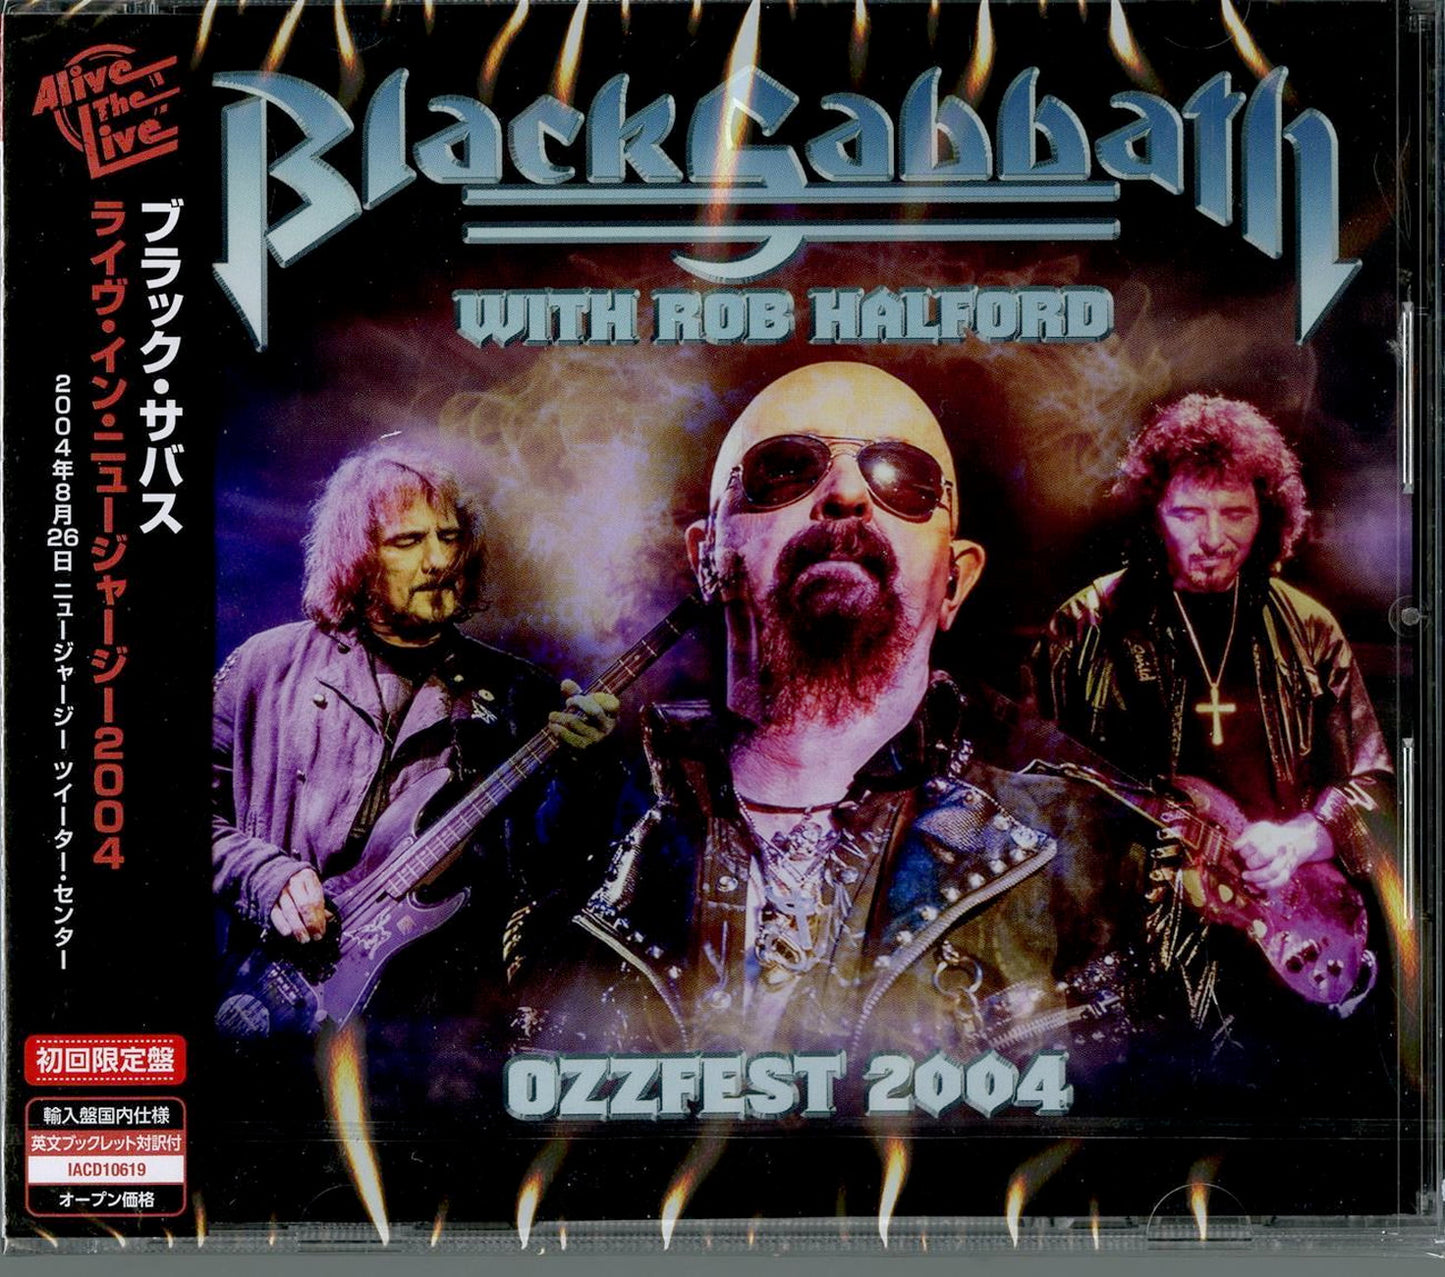 Black Sabbath - Ozzfest 2004 - Import CD